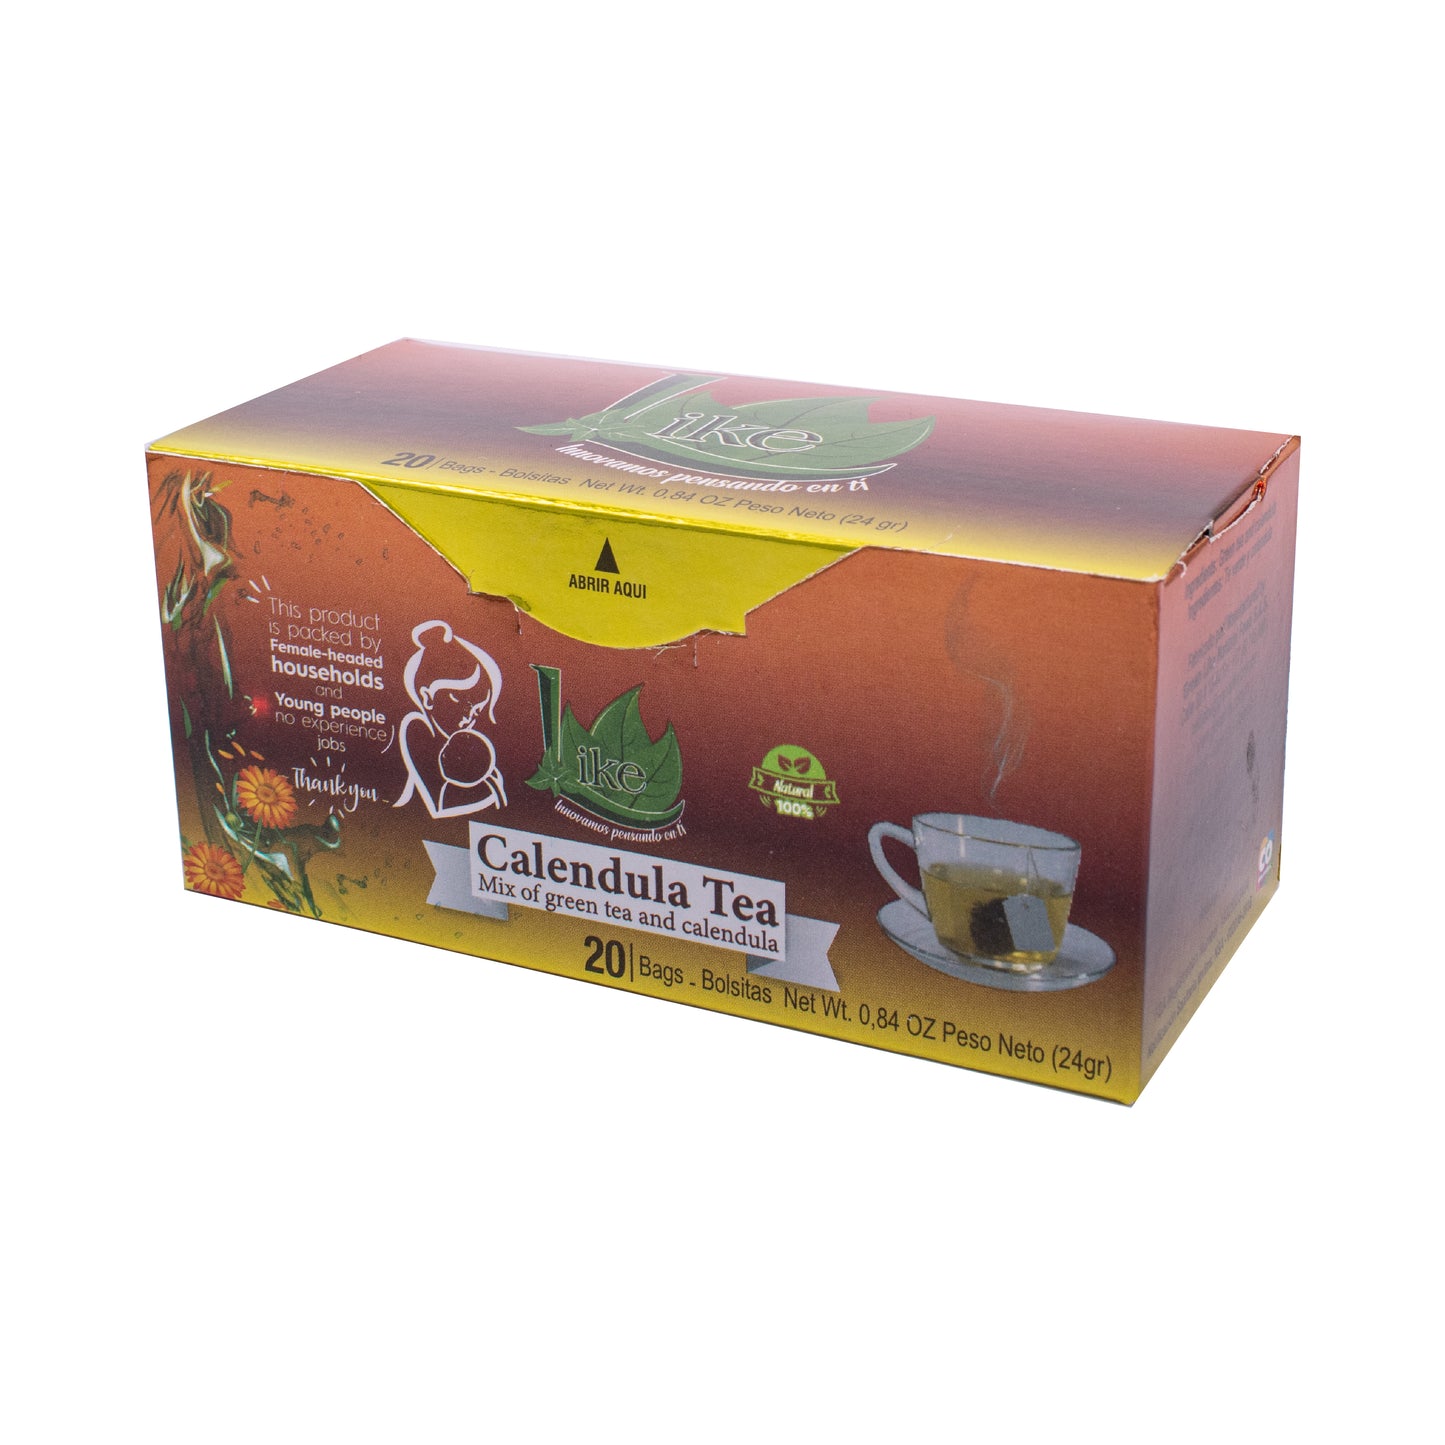 Calendula tea x 4 Packs, 80 Infusions